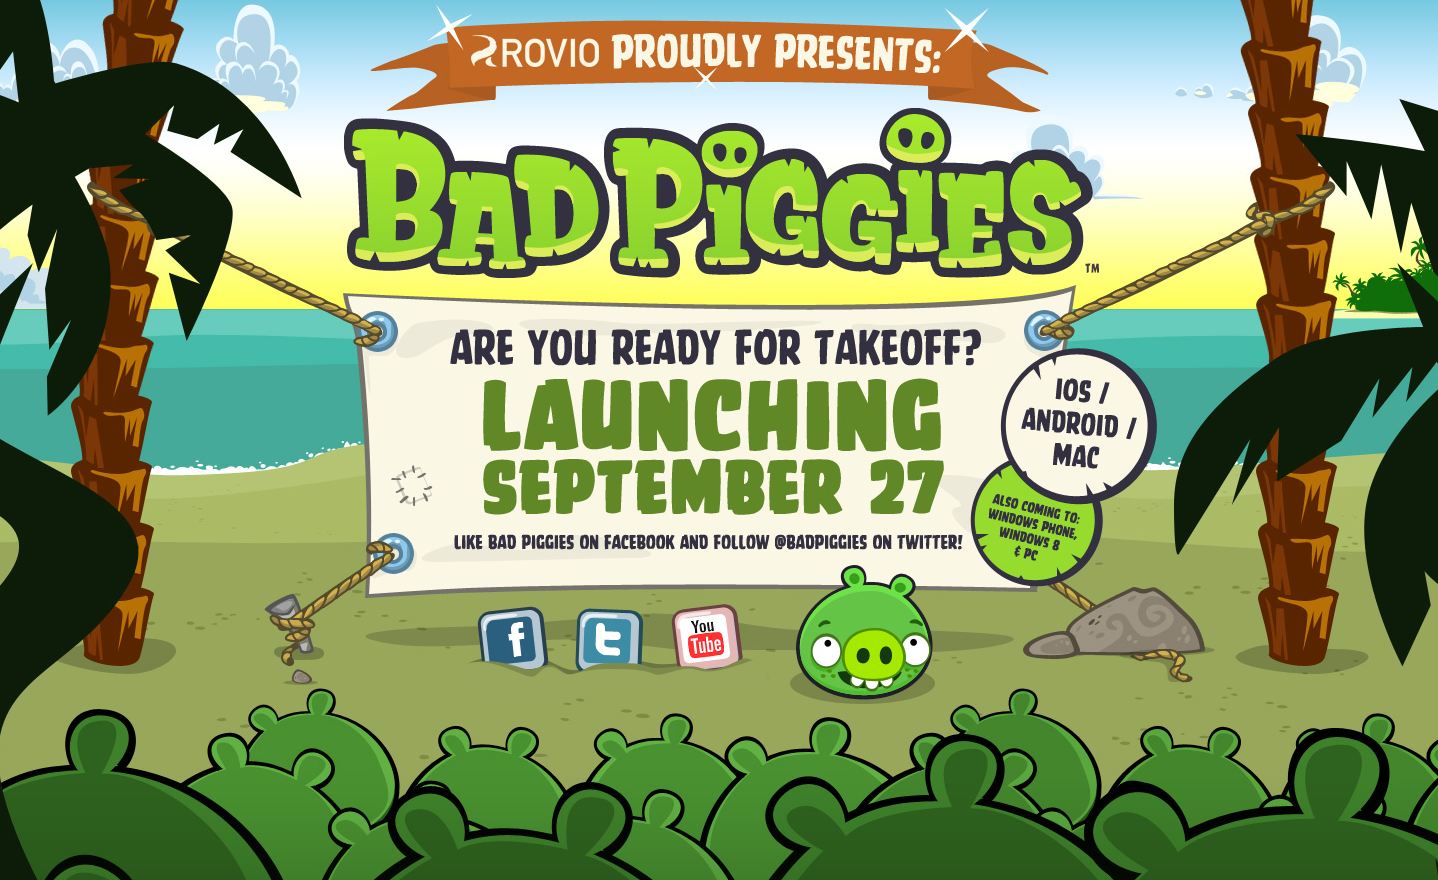 Bad piggies remix. Bad Piggies игра. Игра Bad Piggies (2012). Bad Piggies Rovio. Bad Piggies версия.